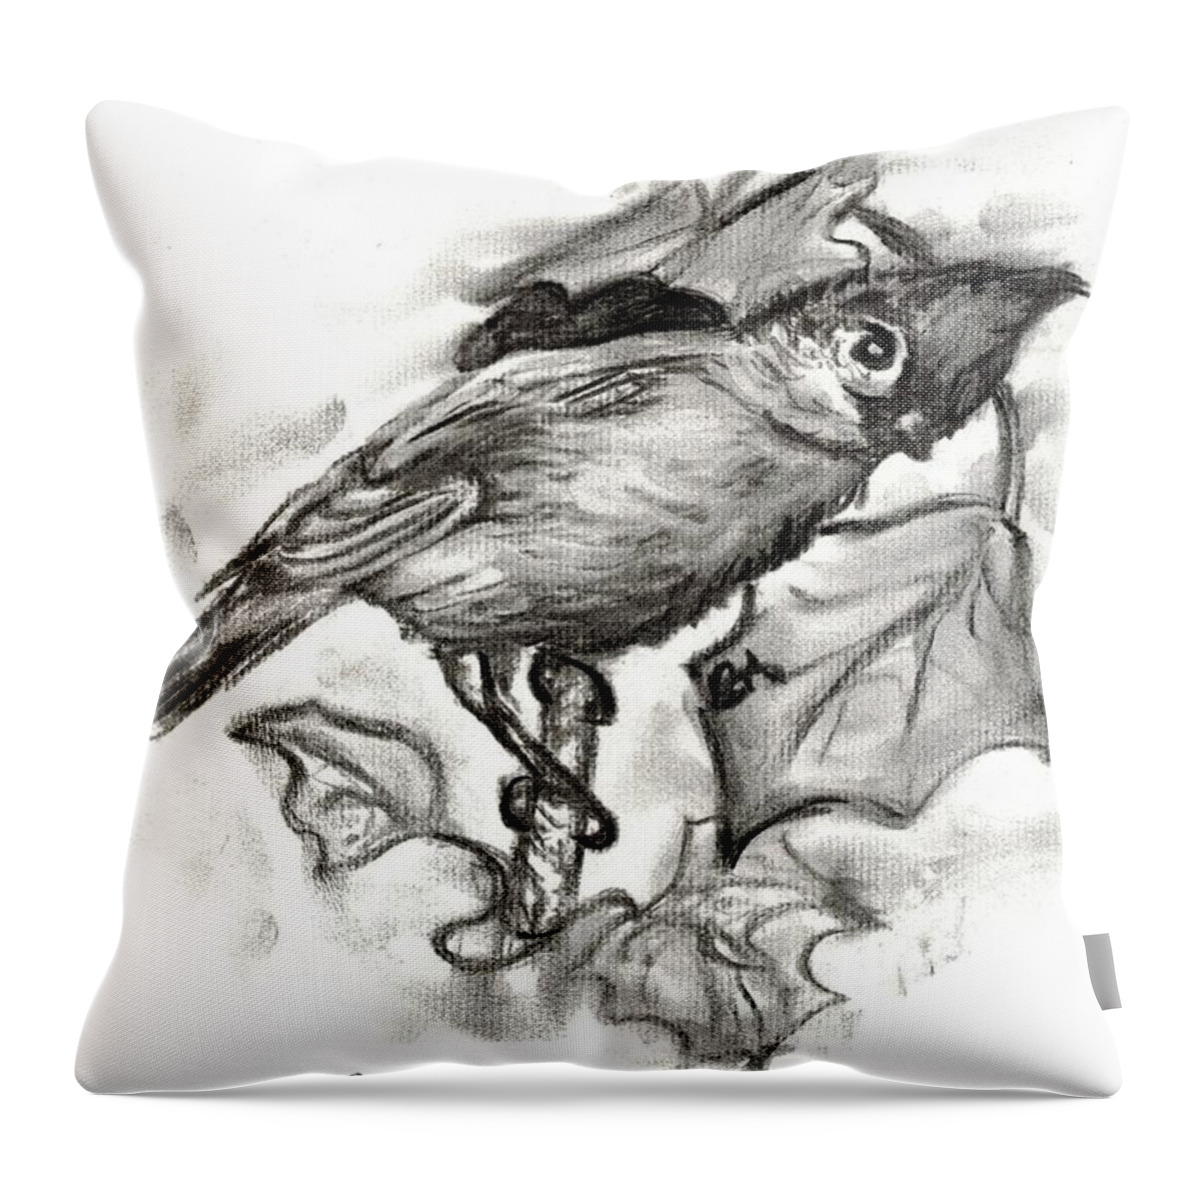 Birds Throw Pillow featuring the drawing Curious titmouse by Carol Allen Anfinsen